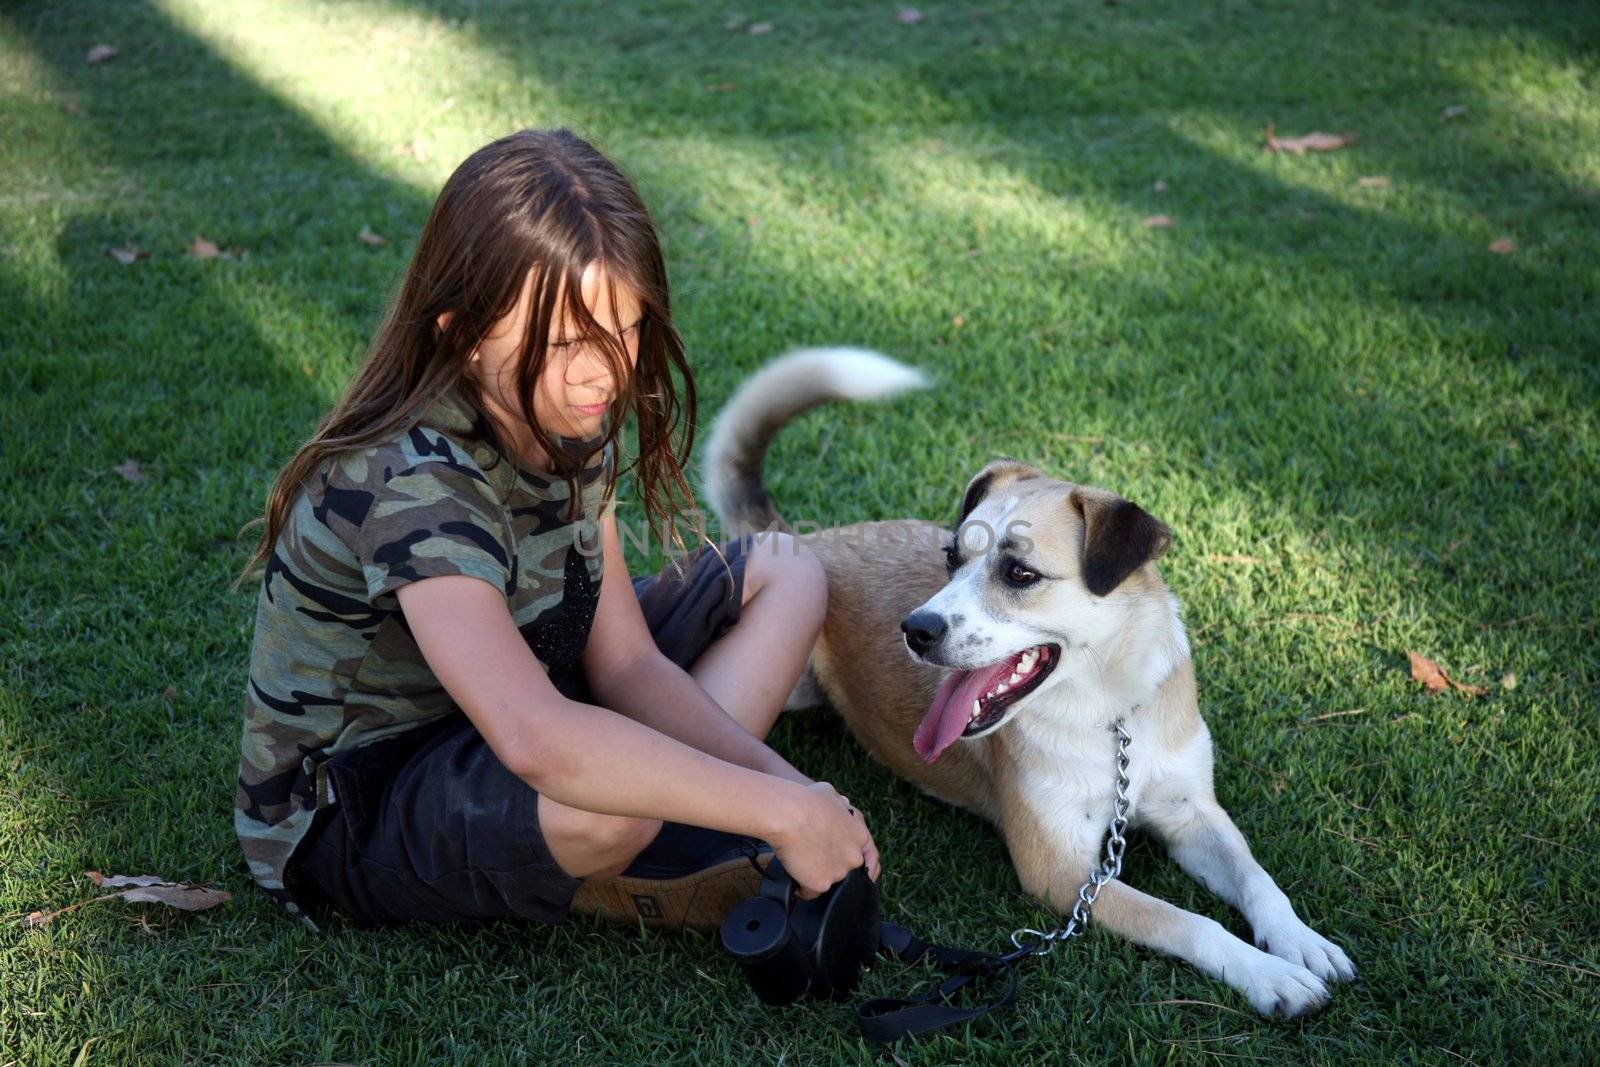 Girl with an abundance of attitude and her dog